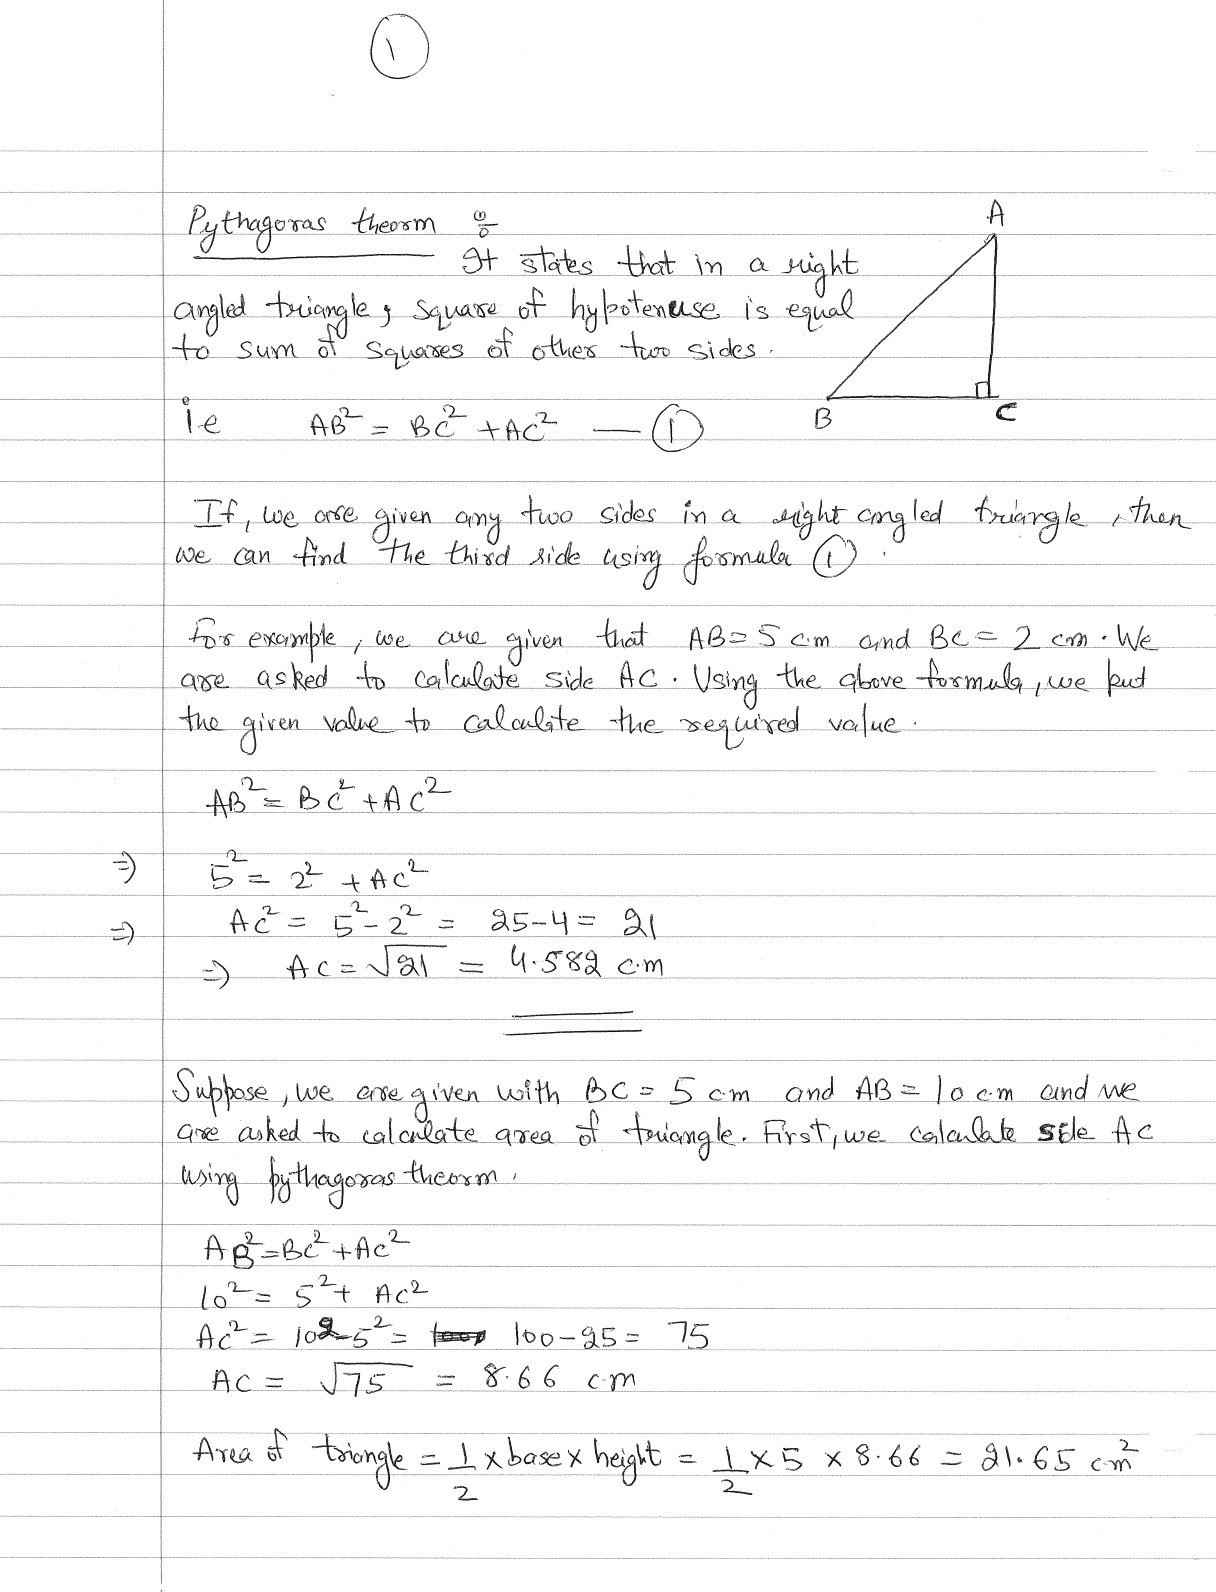 Detail about Pythagoras Theorm